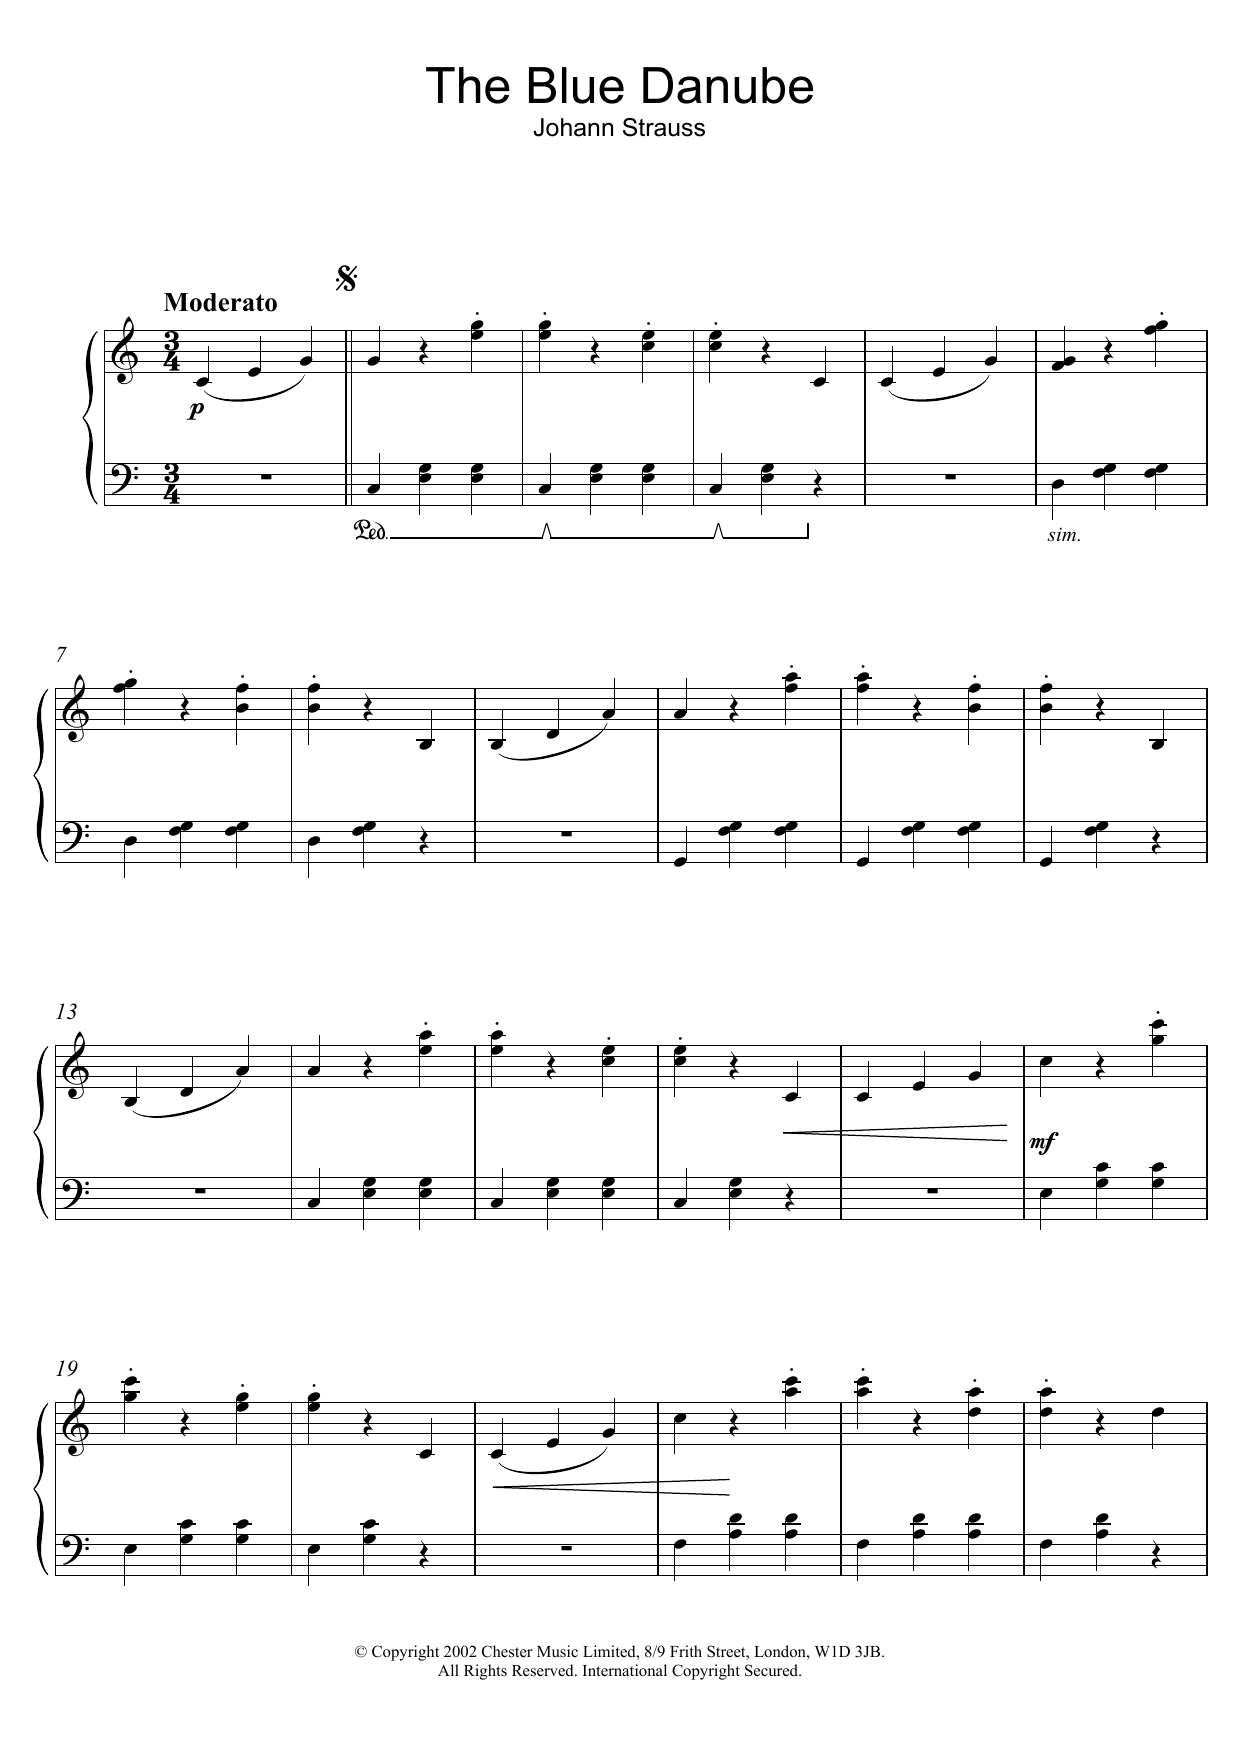 The Blue Danube Waltz Sheet Music by Johann Strauss II for Piano ...